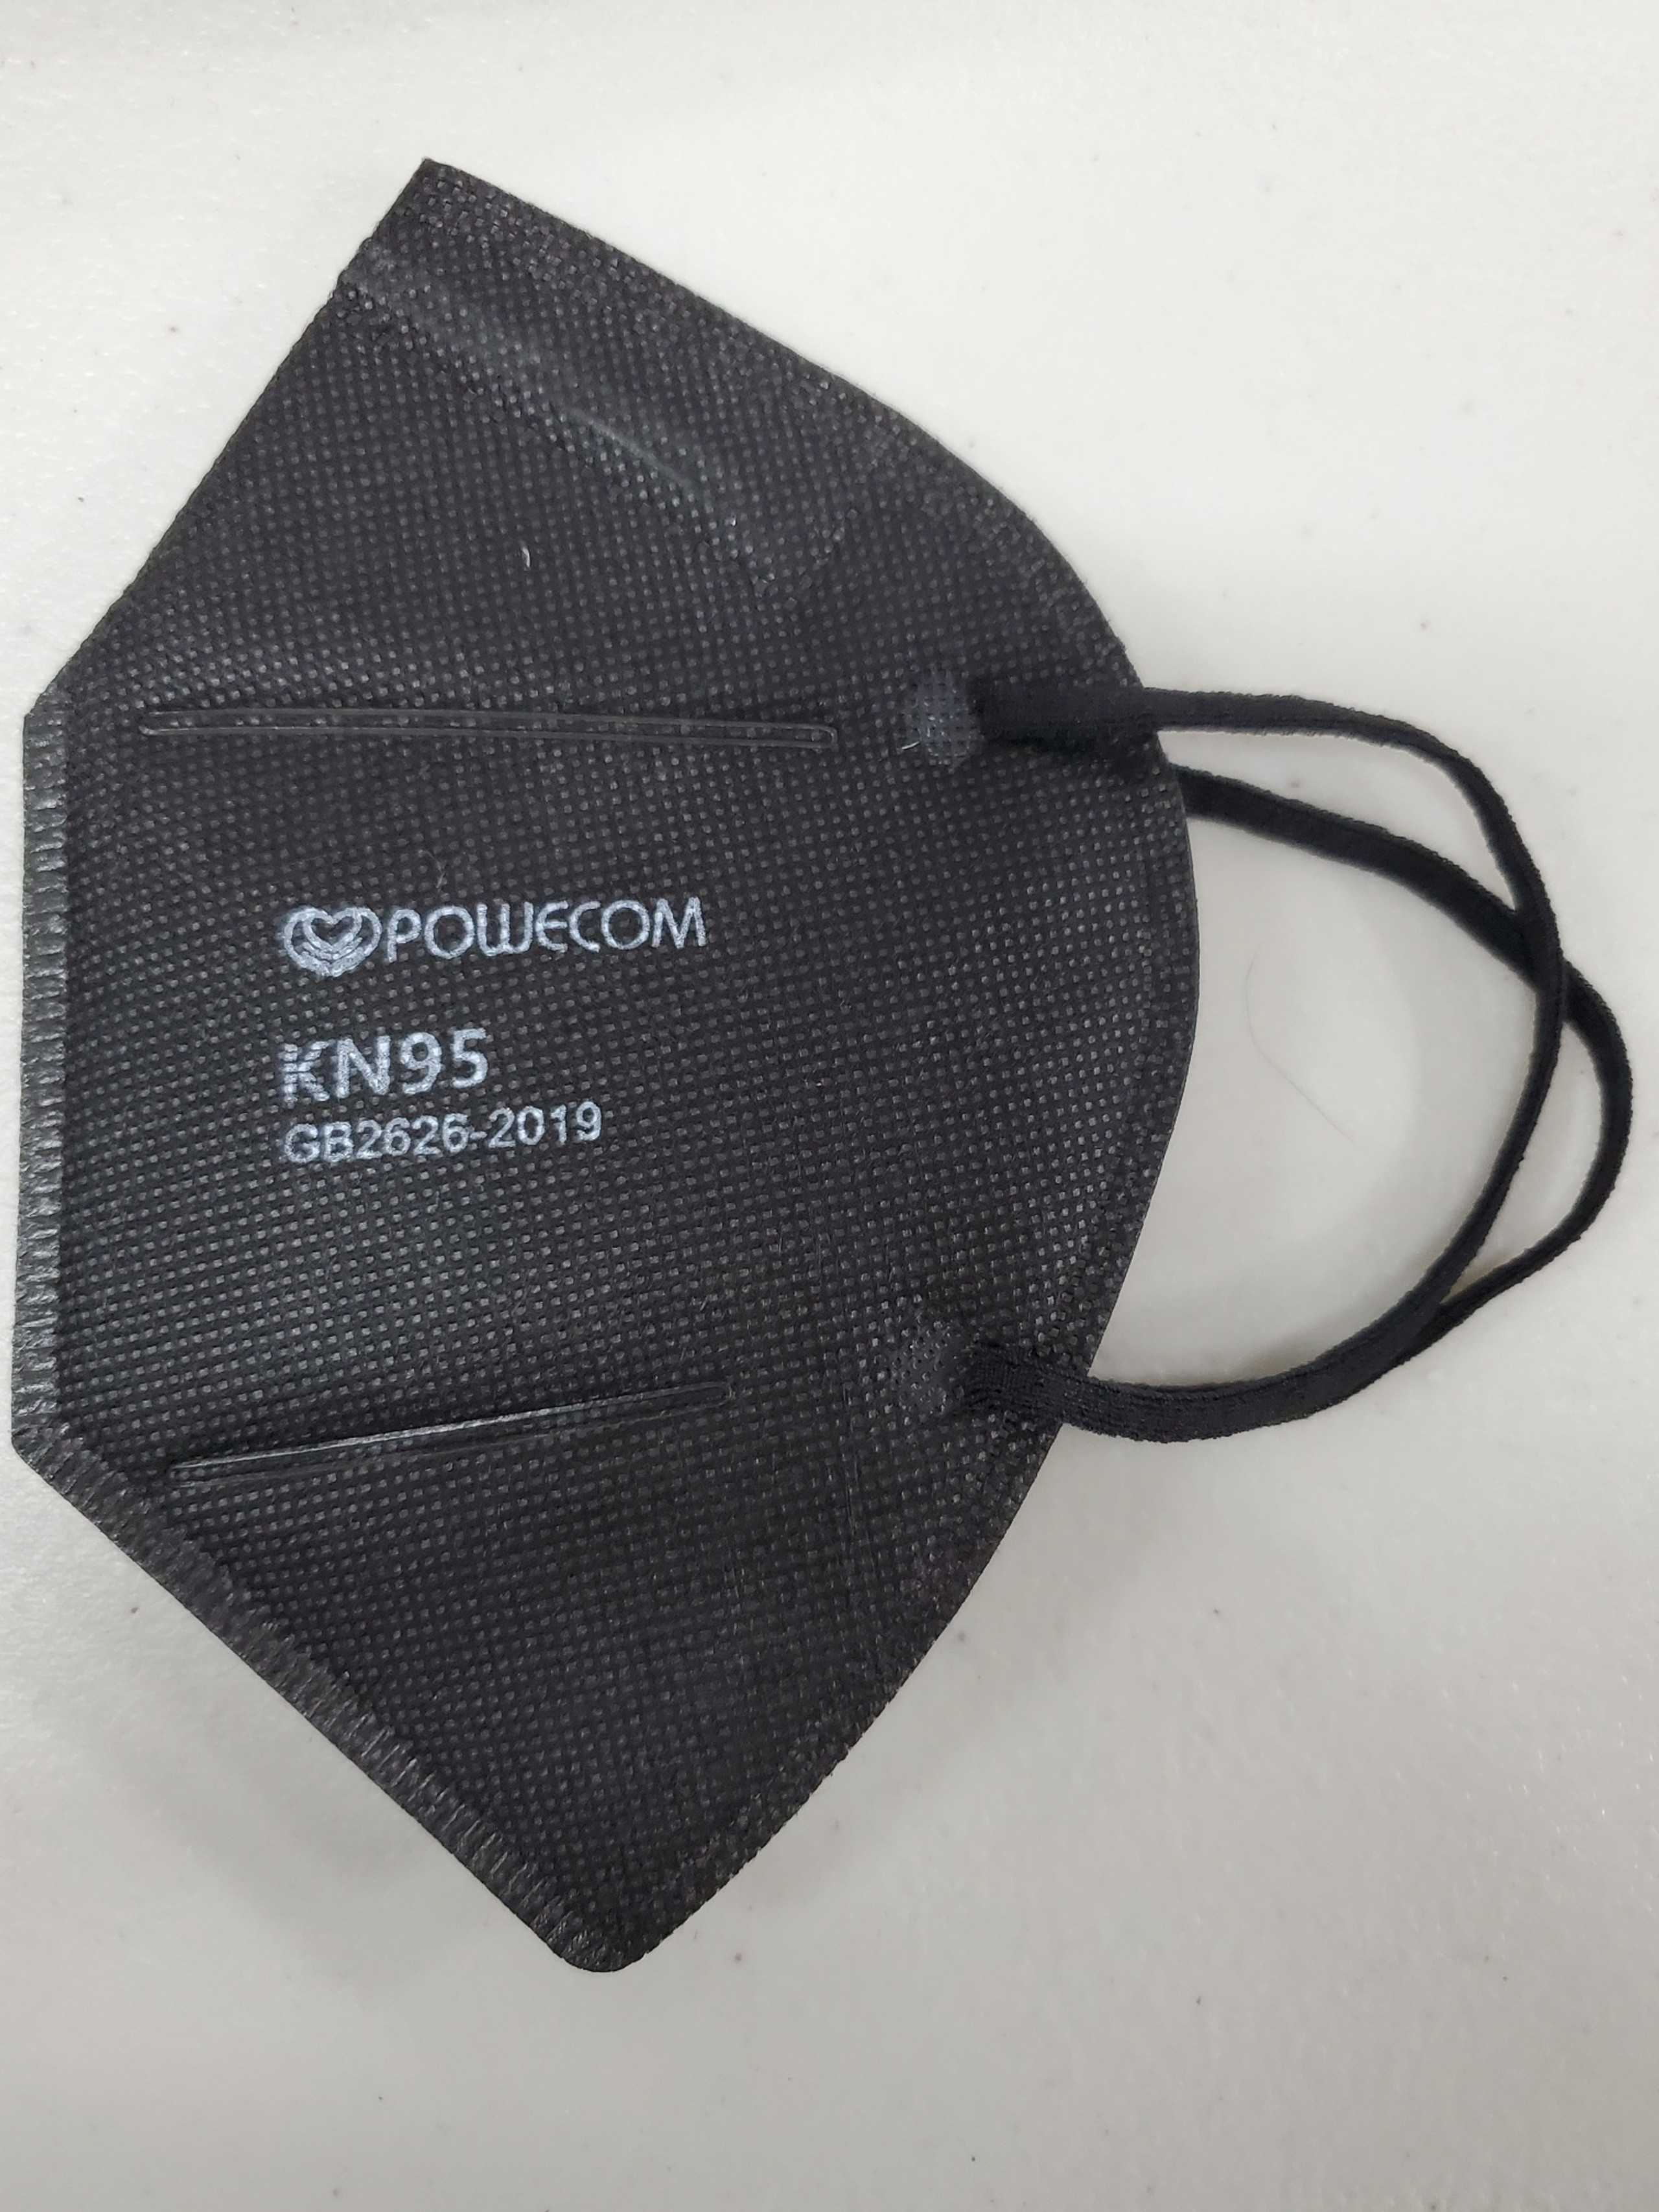 Black KN95 Face Mask - Powecom - CE Certified - FDA Authorized | Buy ...